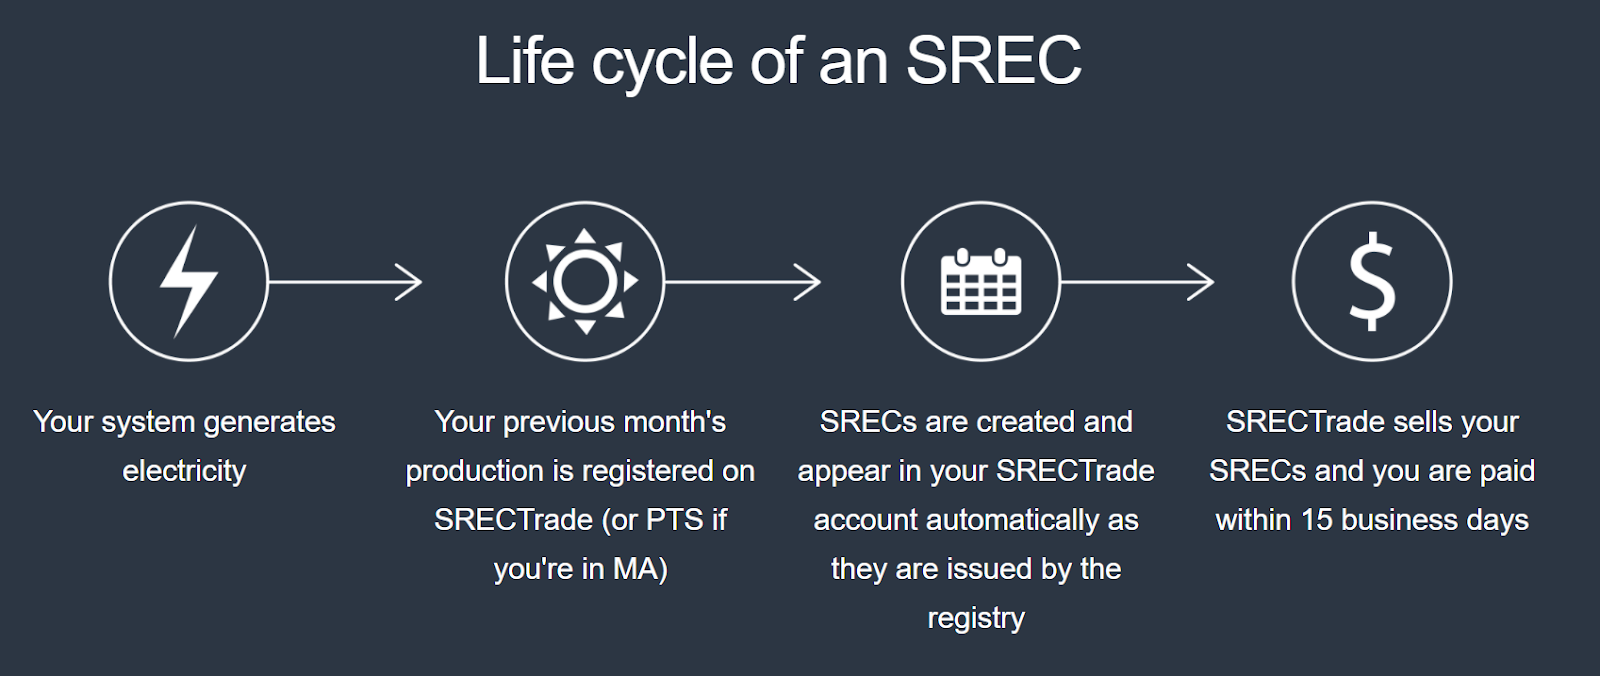 Life cycle of an SREC